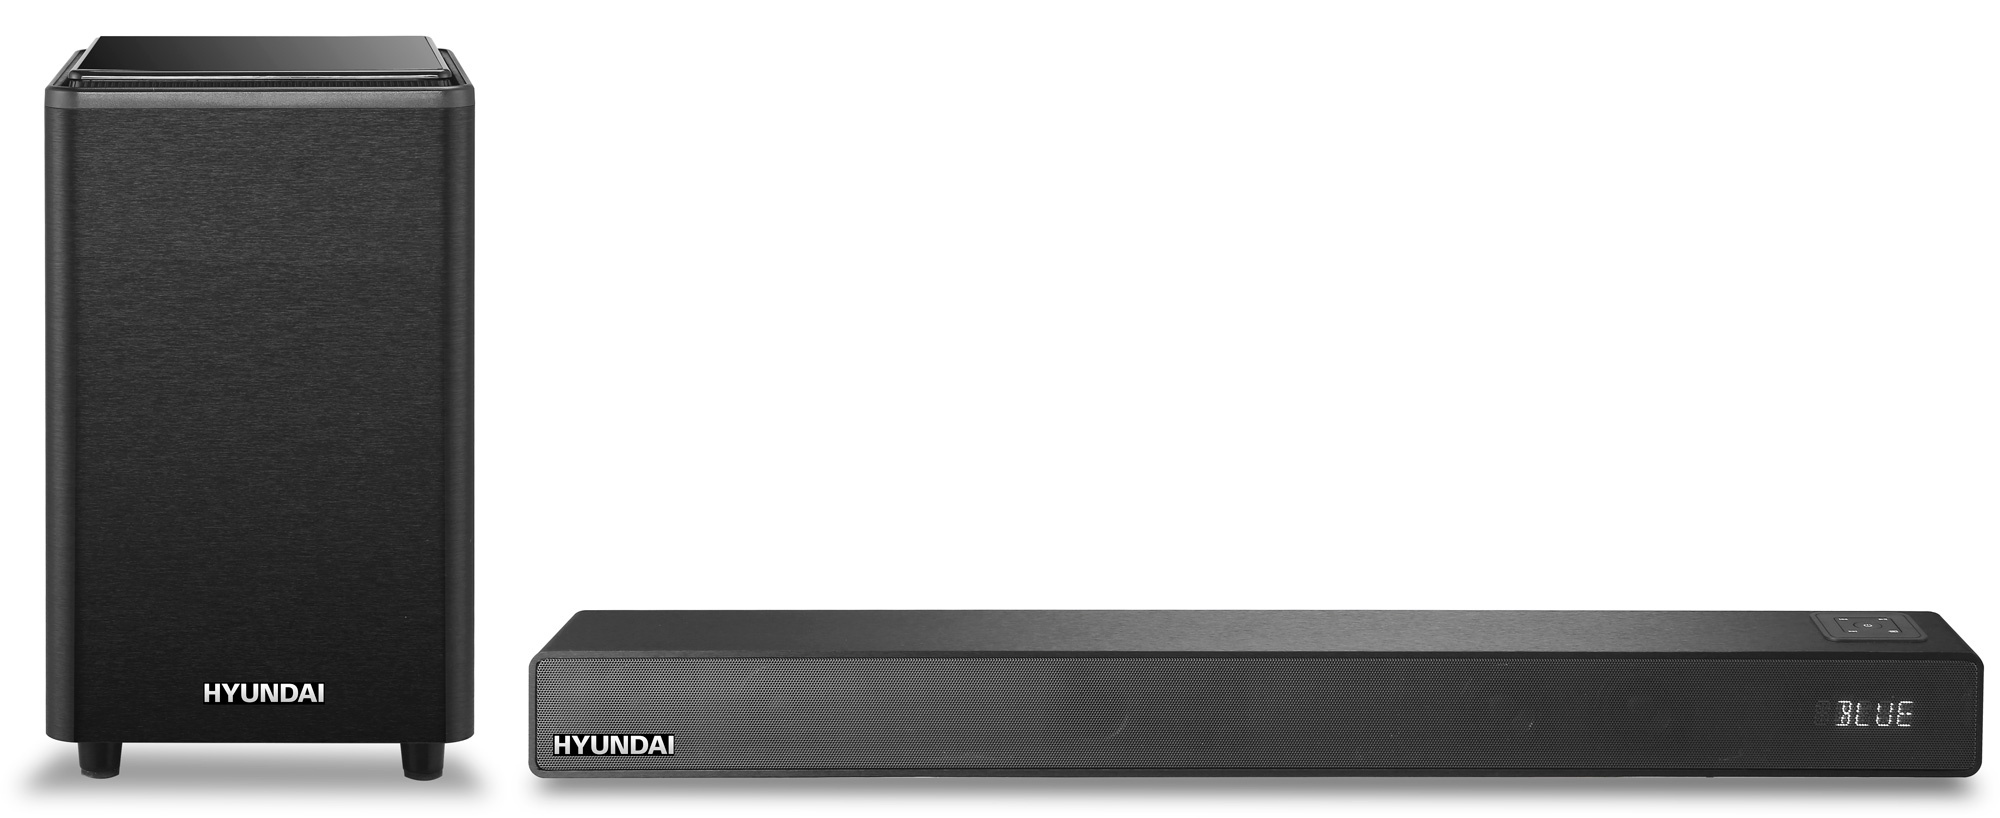 Саундбар 2.1 Hyundai H-HA650, 150Вт, FM, USB, microSD, Bluetooth, черный